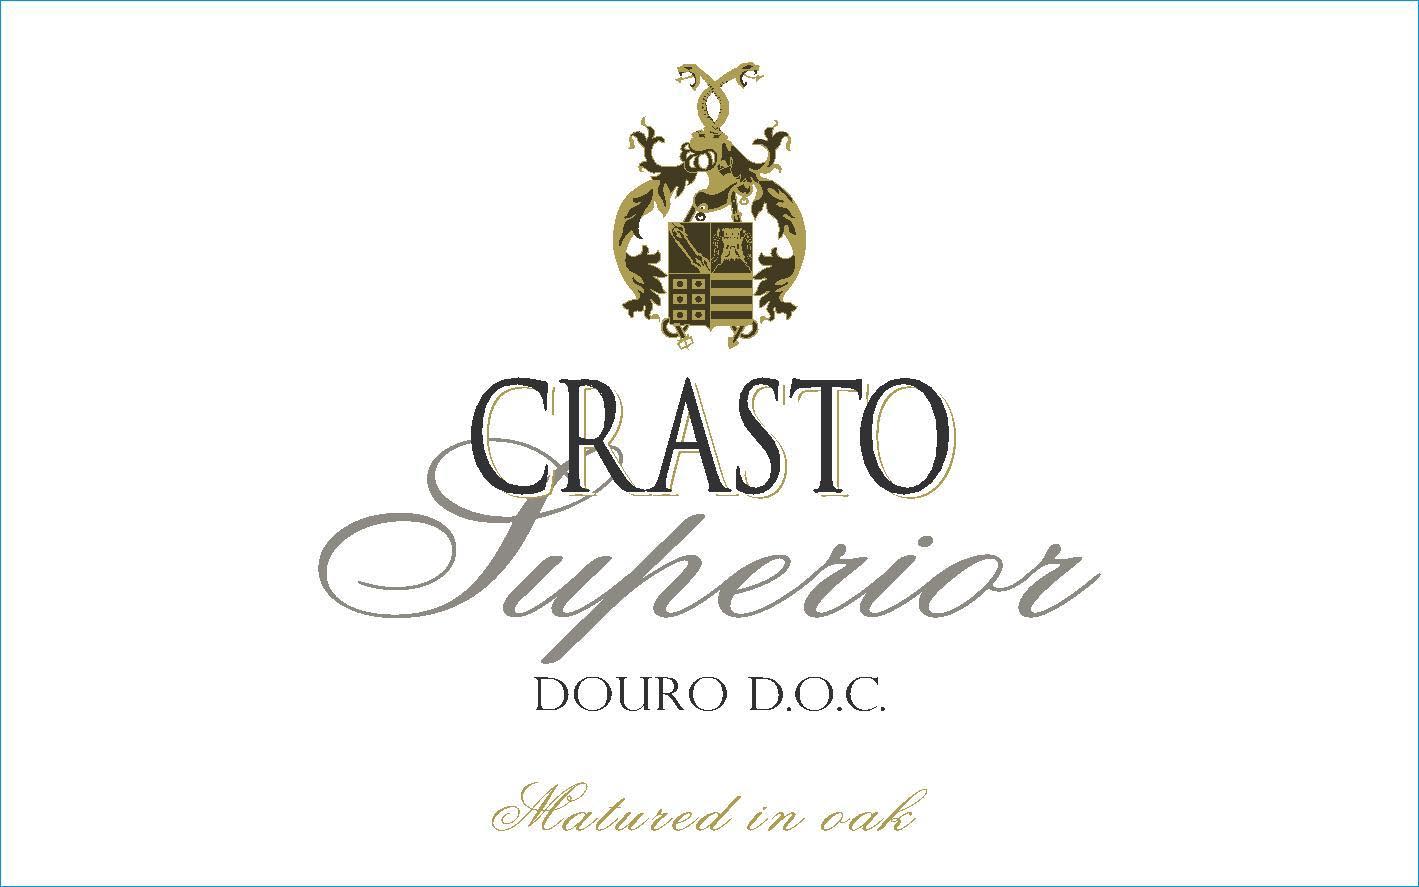 Quinta Do Crasto - Superior White label